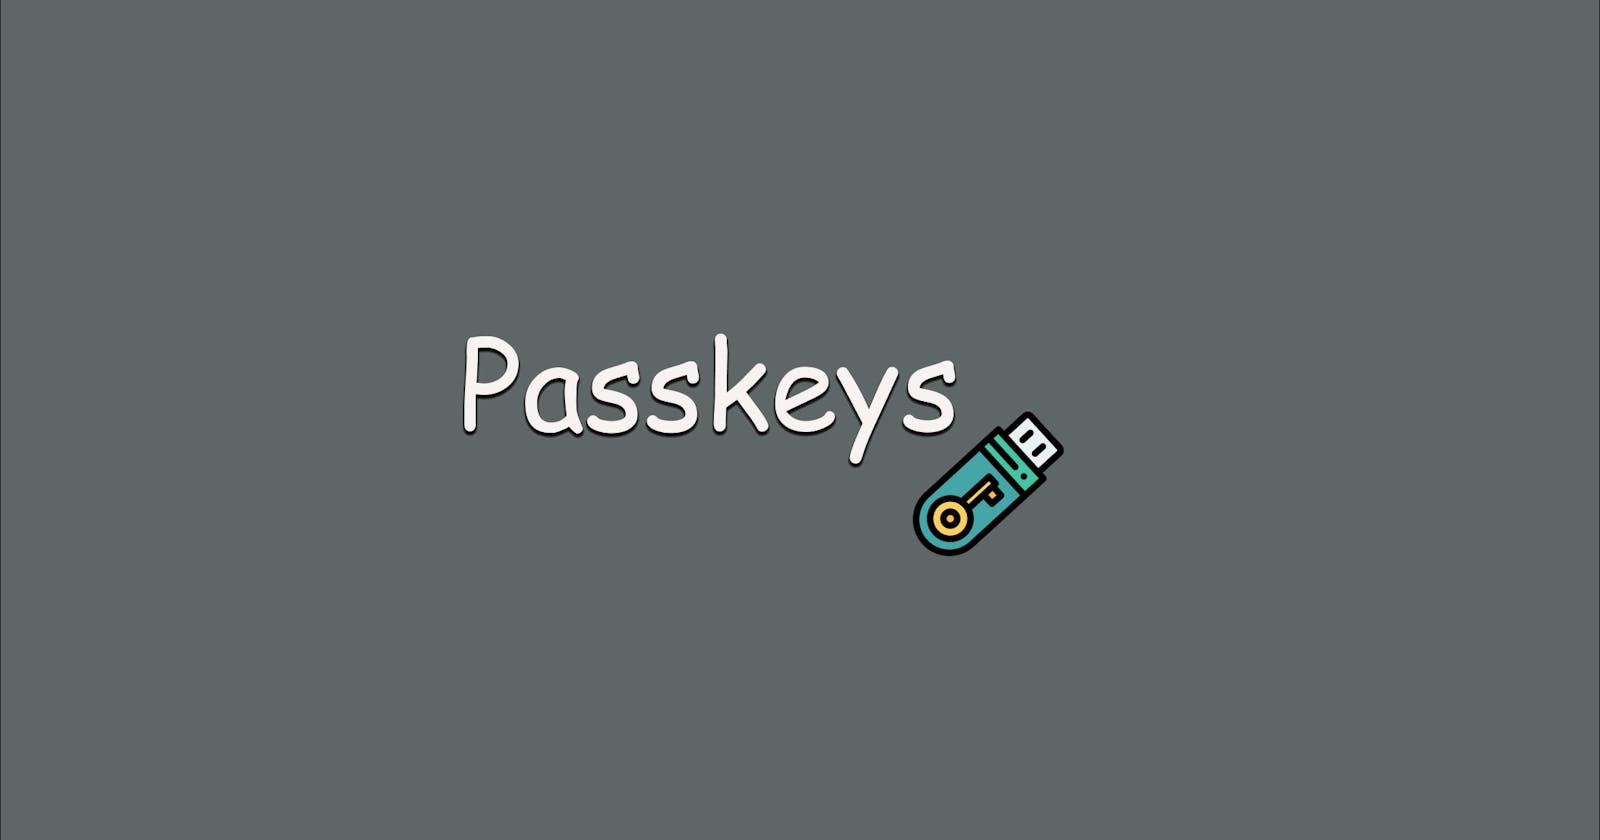 Passkeys